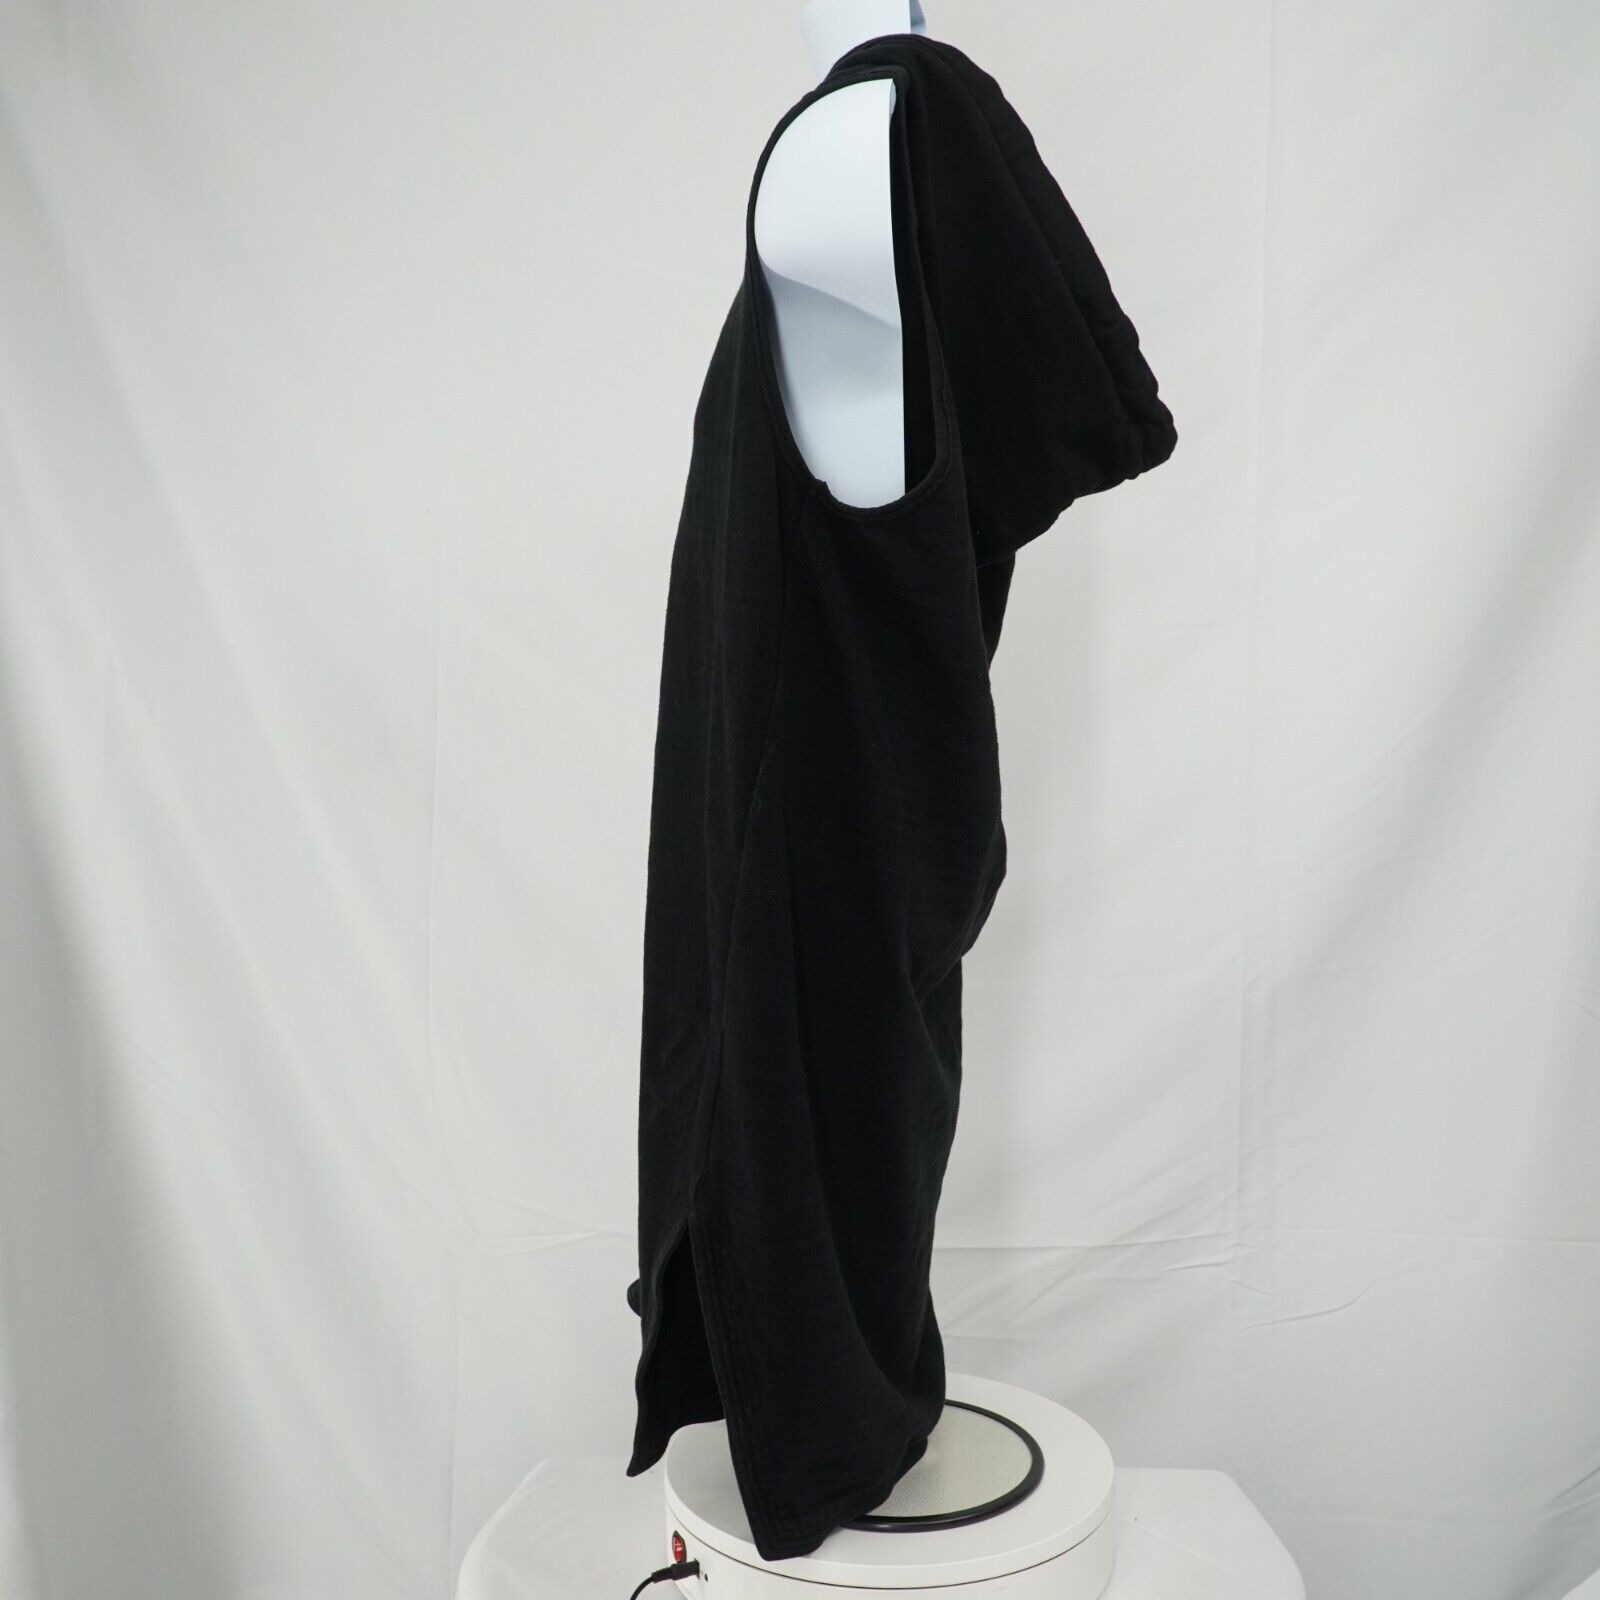 Black Zip Up Sleeveless Jacket Hoodie Cotton - Medium - 11